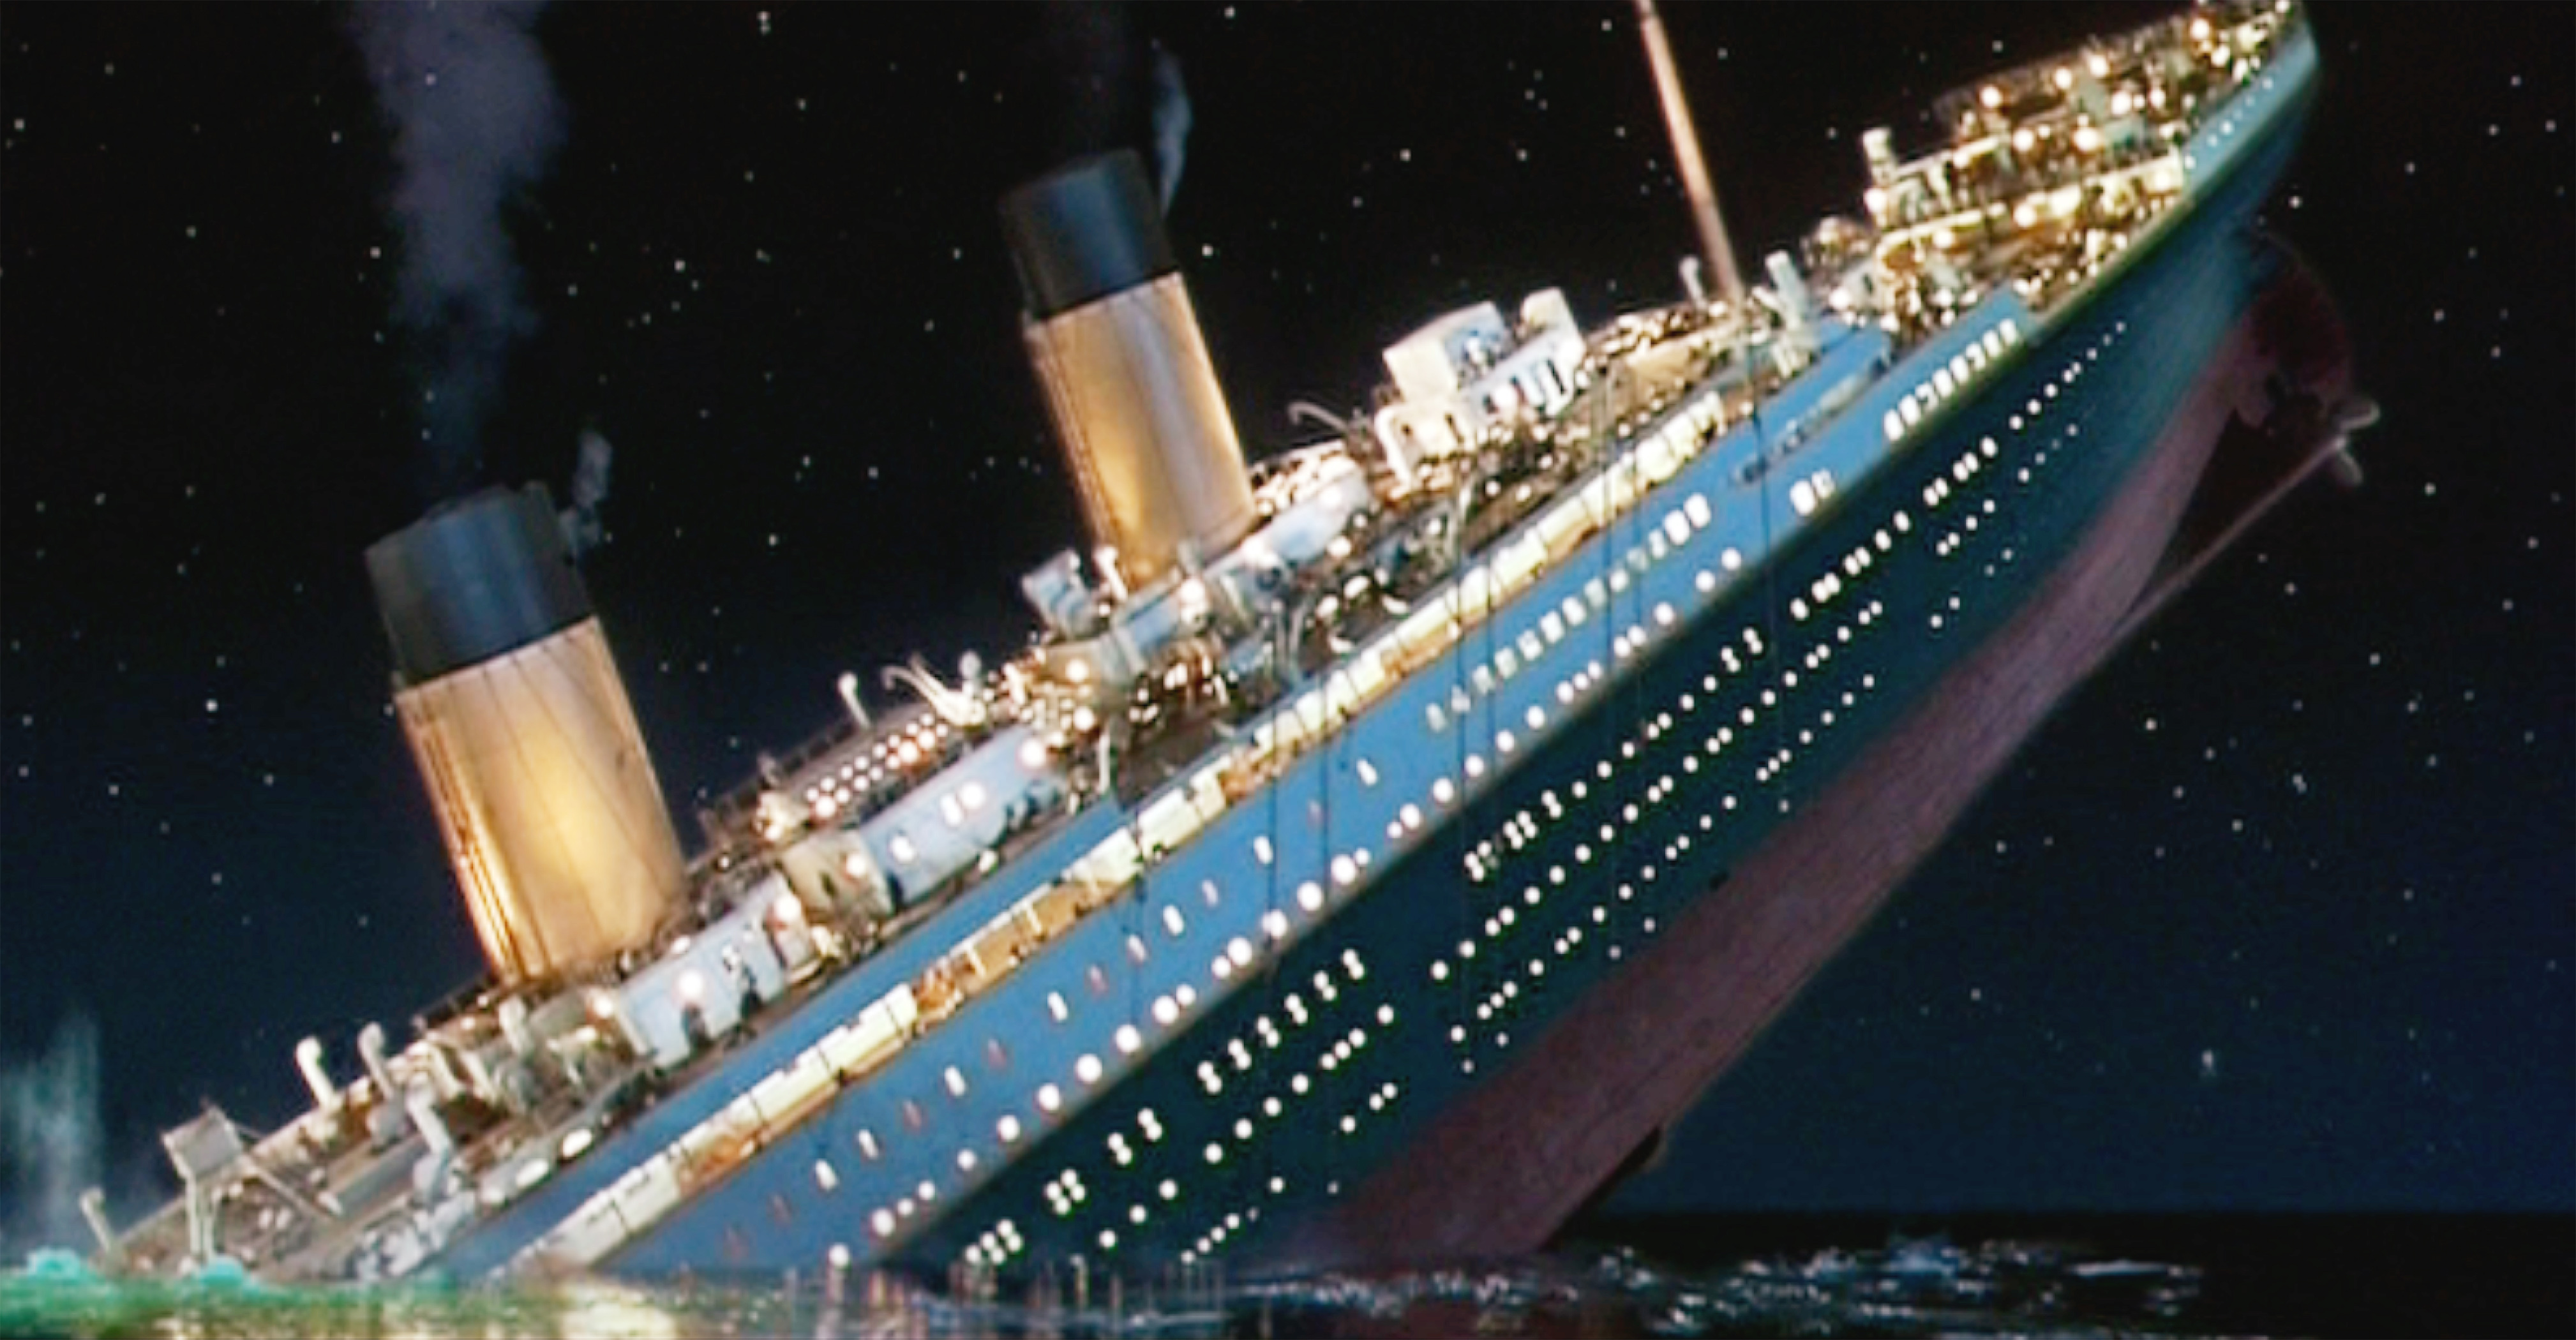 Titanic sinking in the ocean